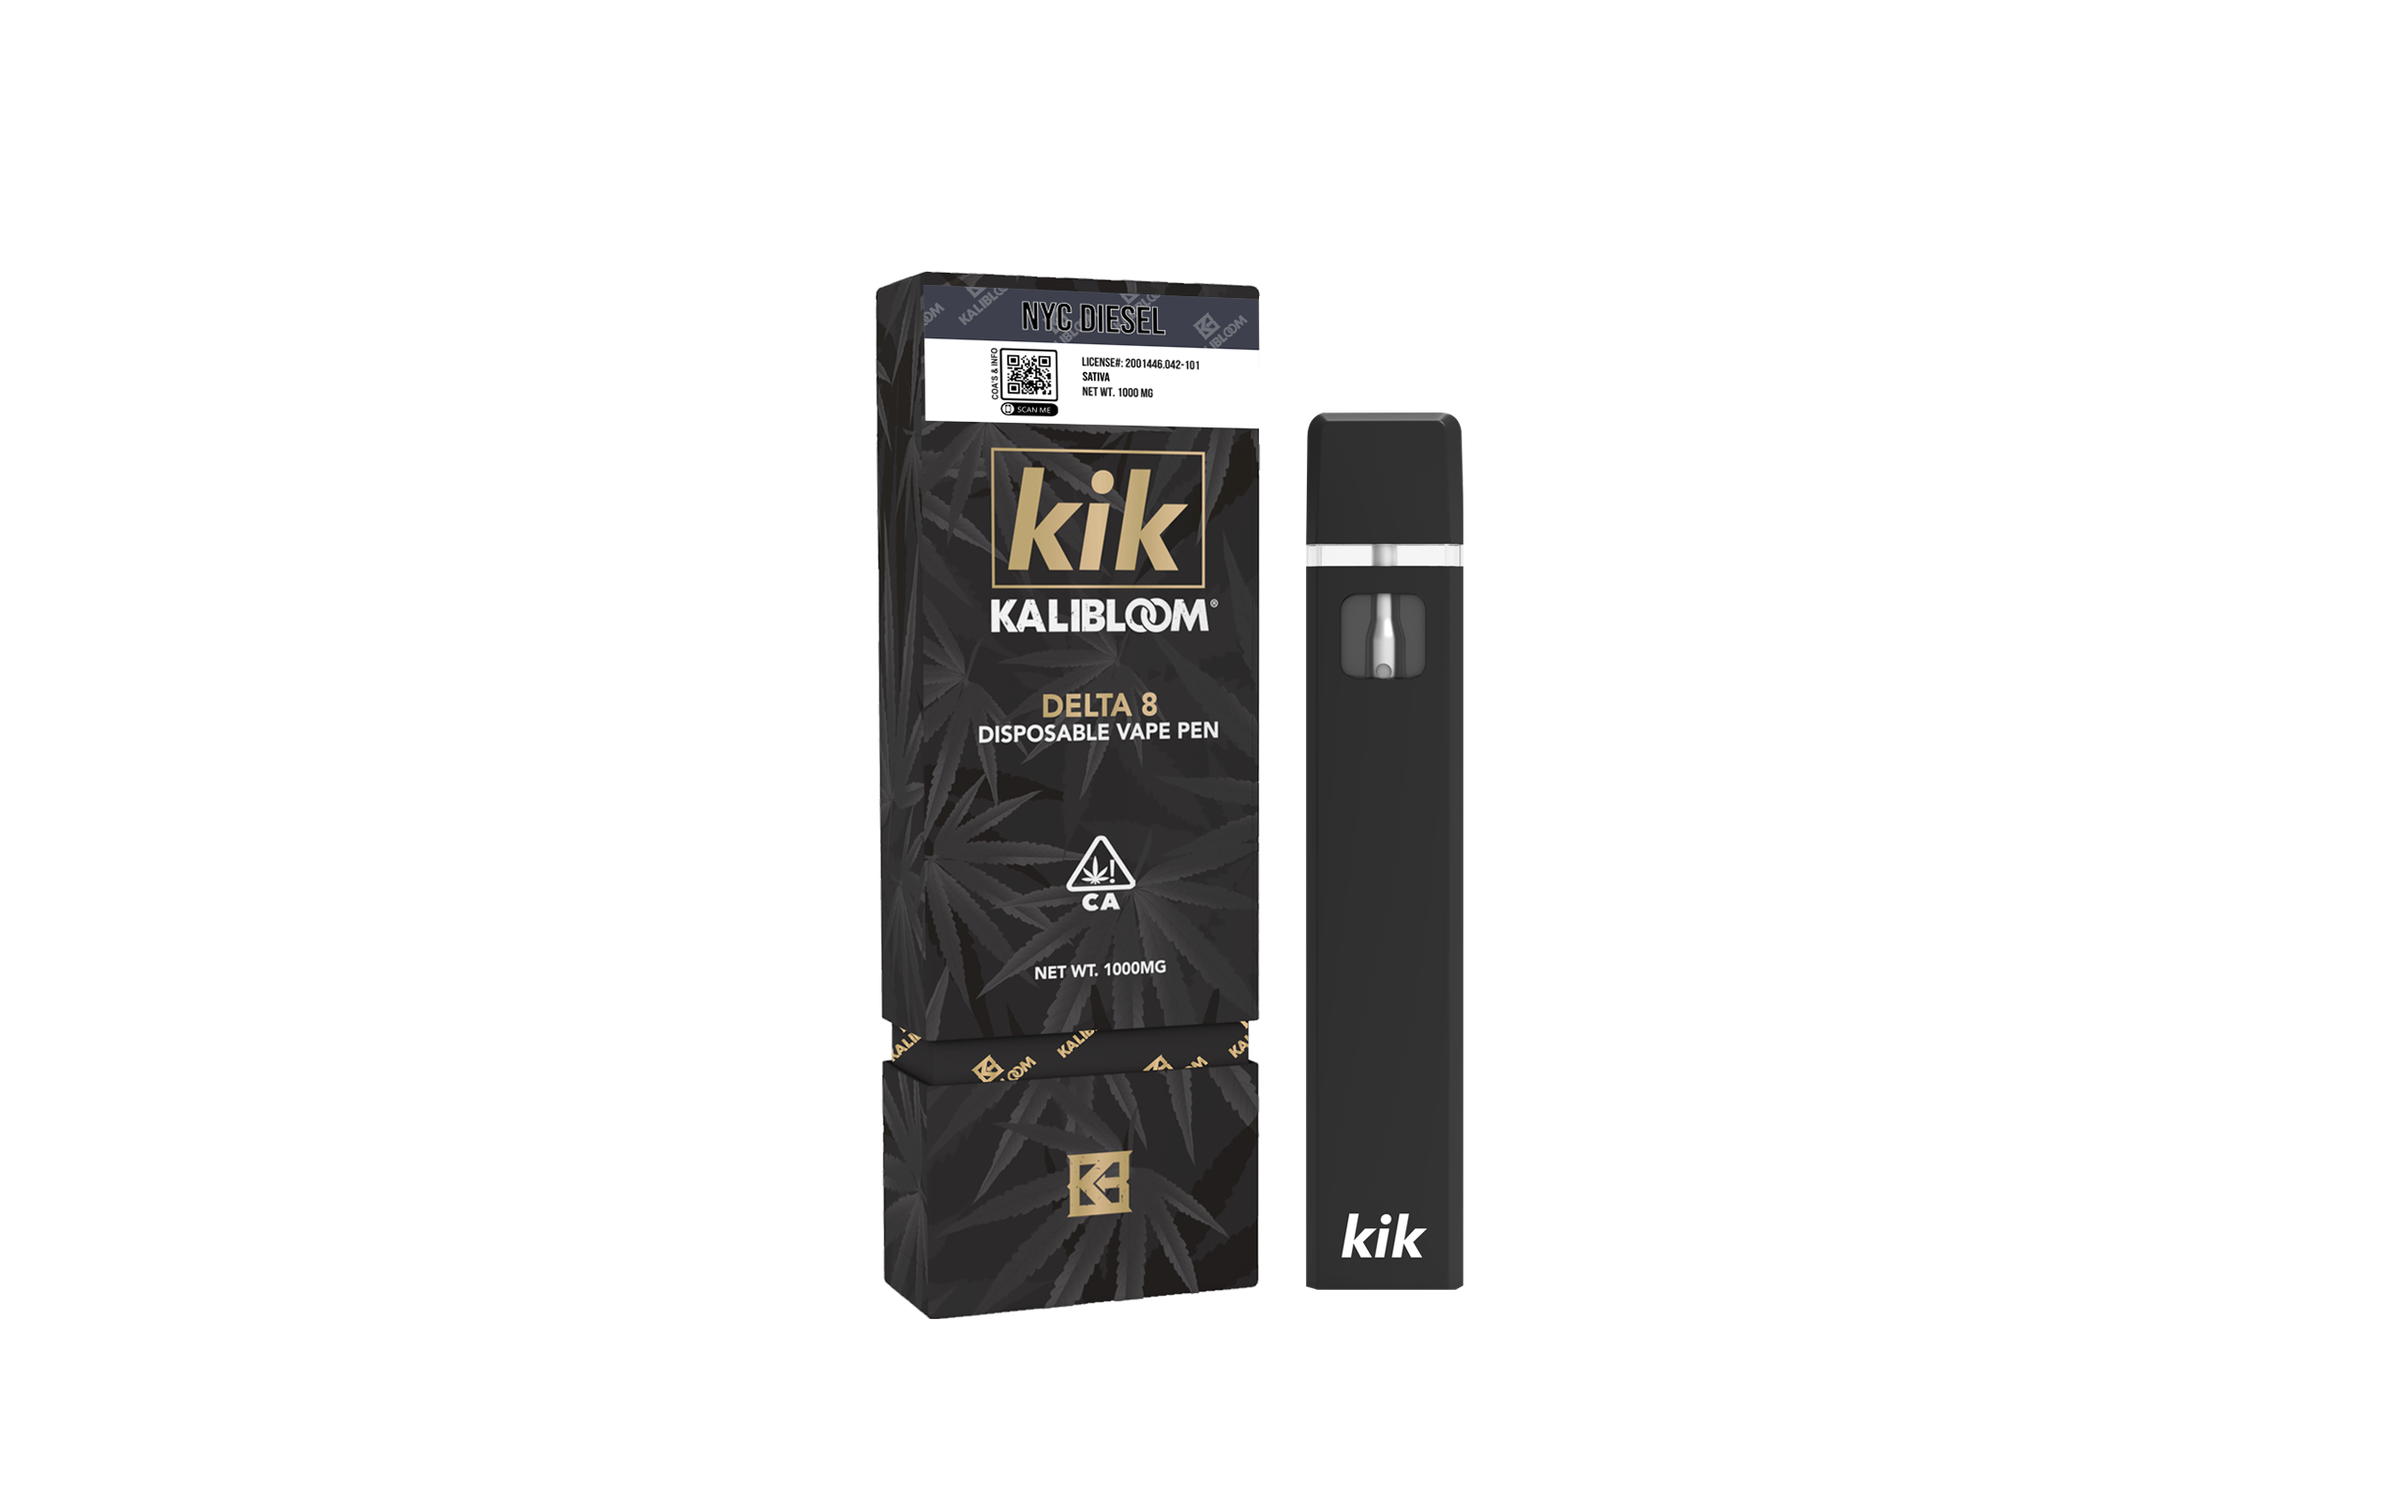 Kalibloom - AVAILABLE NOW-Kik D8 disposable vape. . Enjoy